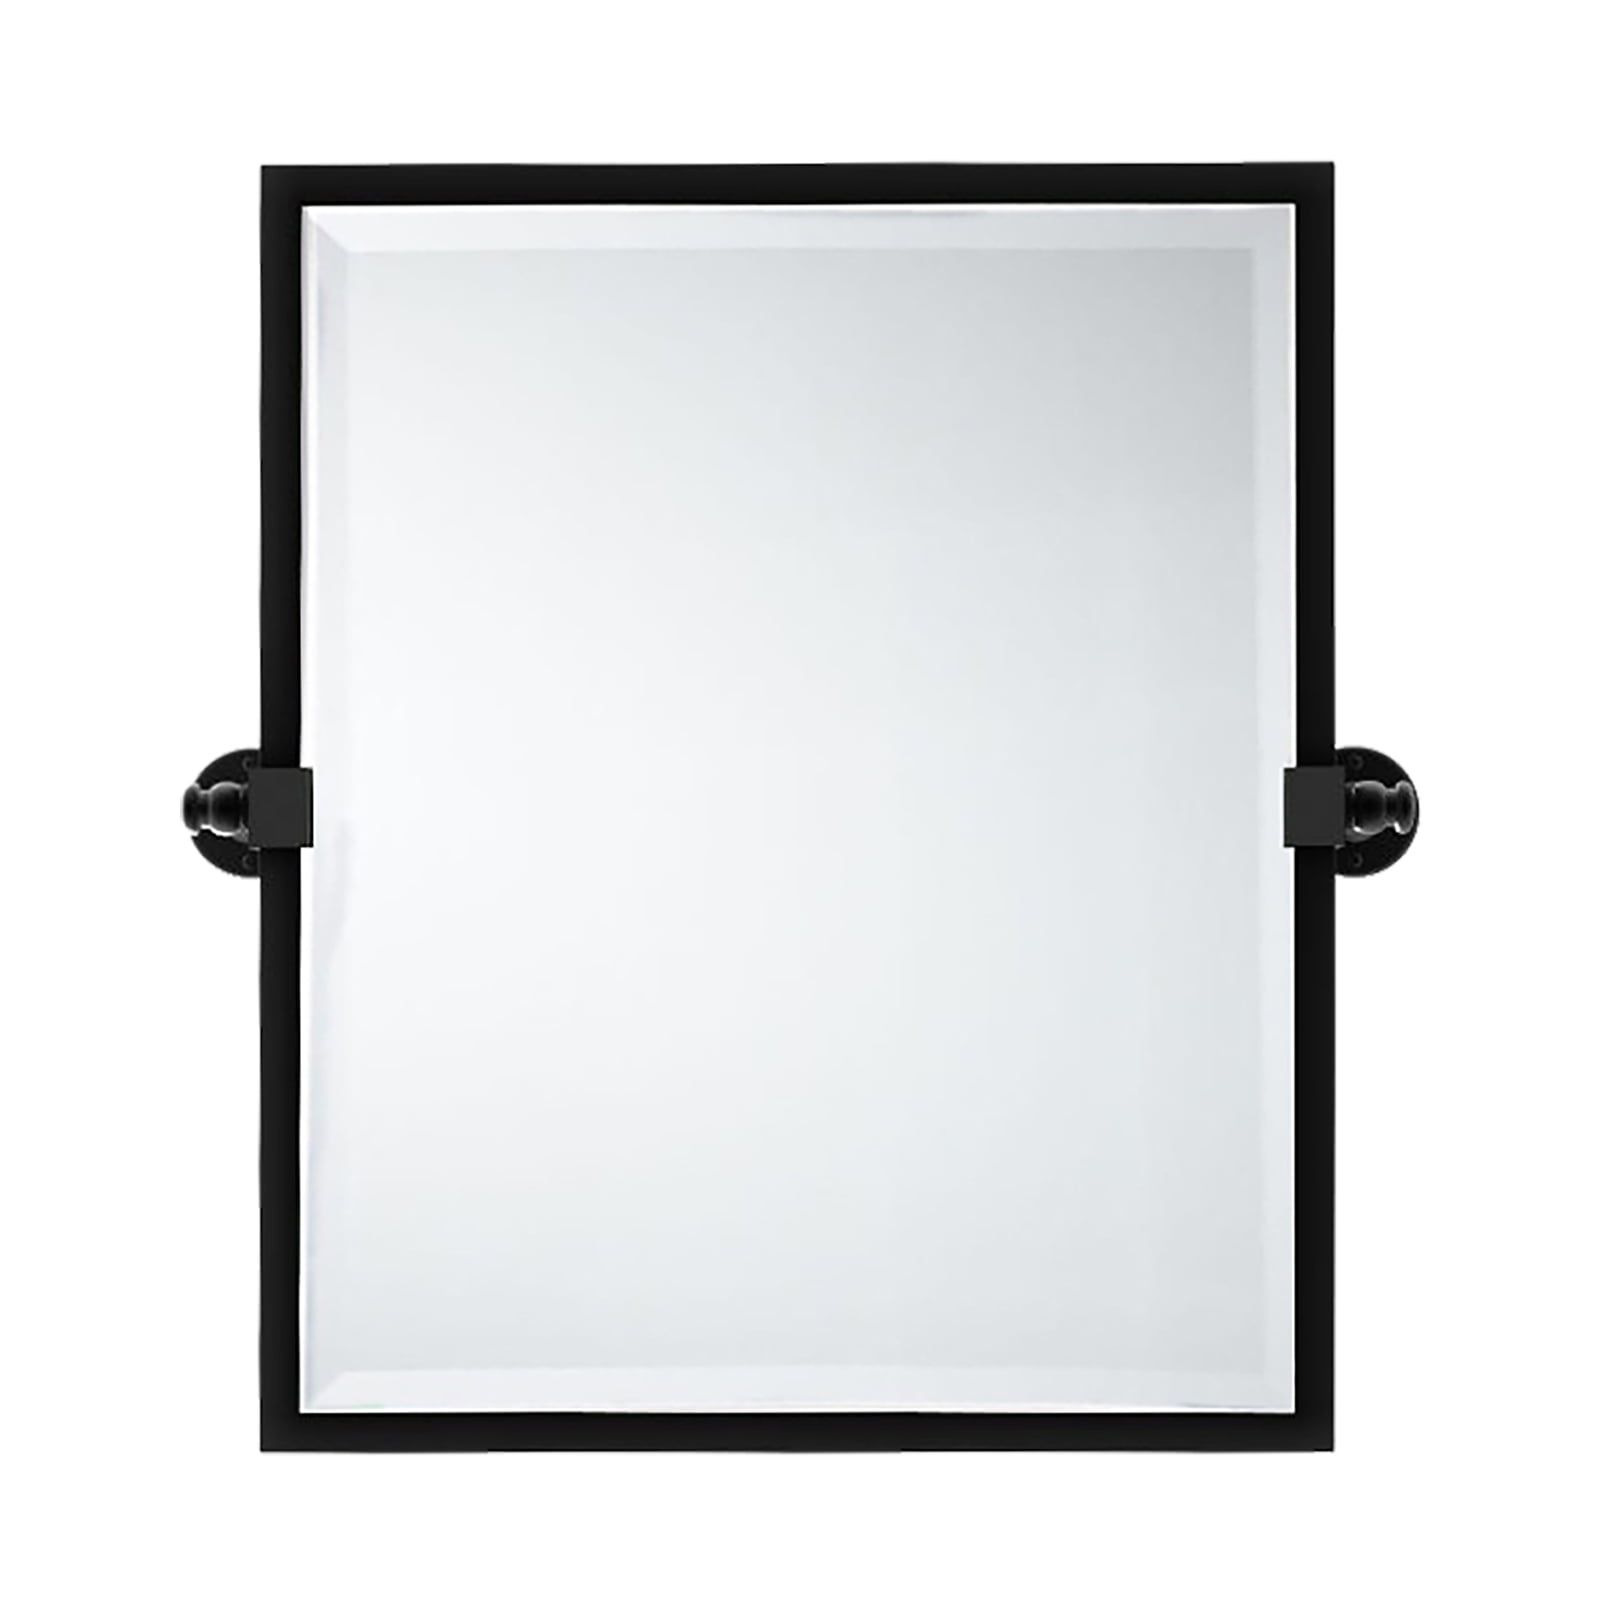 TEHOME Black Metal Framed Pivot Rectangle Bathroom Mirror 20x24